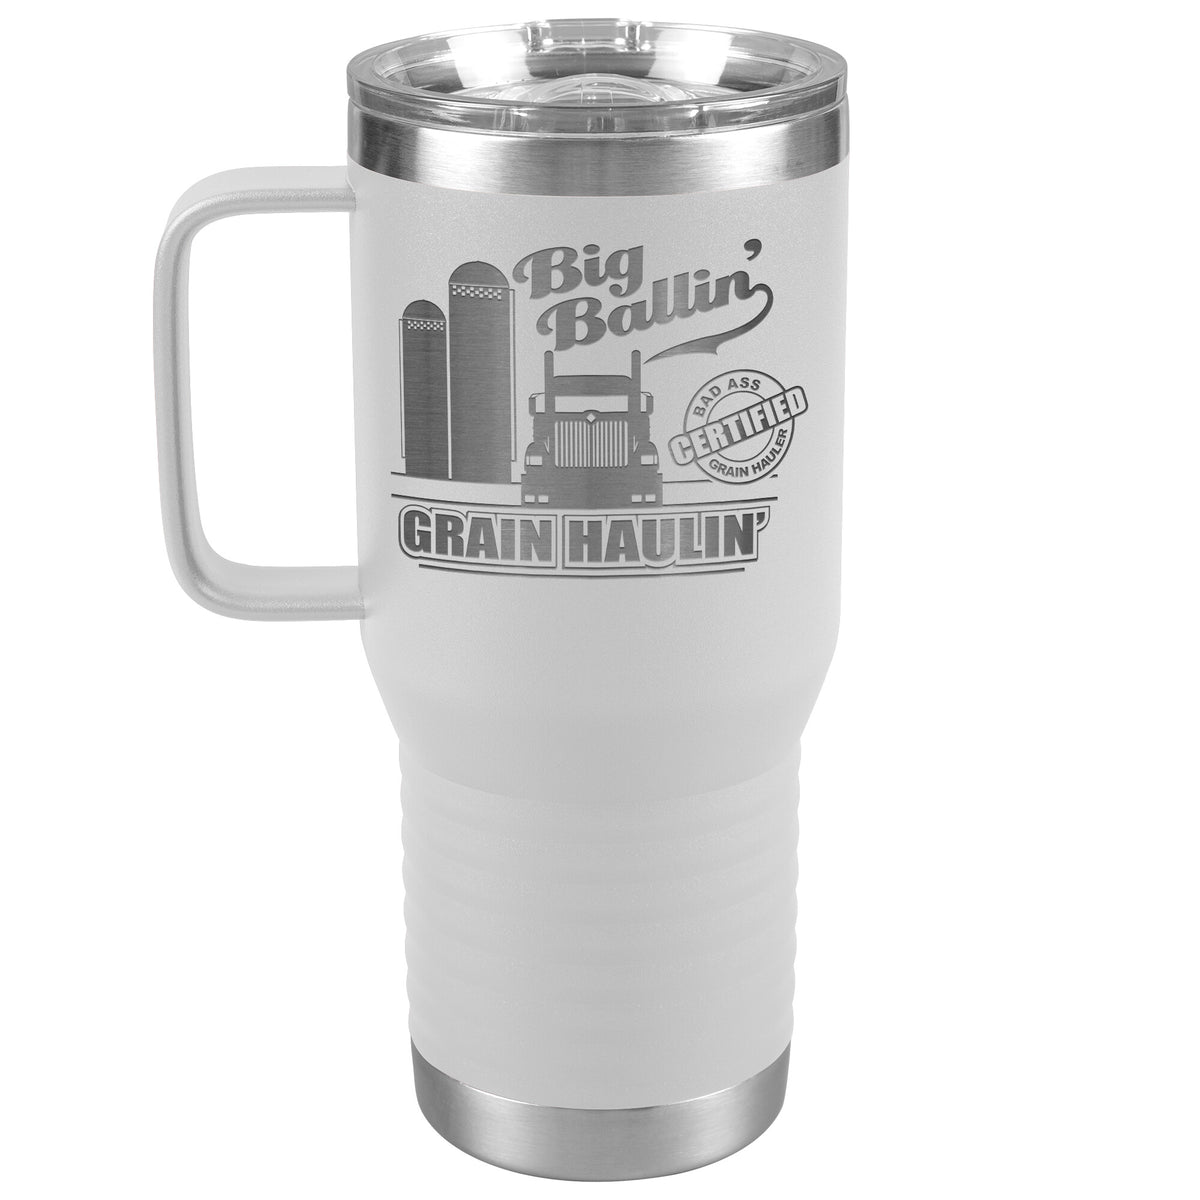 Big Ballin' Grain Haulin' 9900 20oz Handle Tumbler